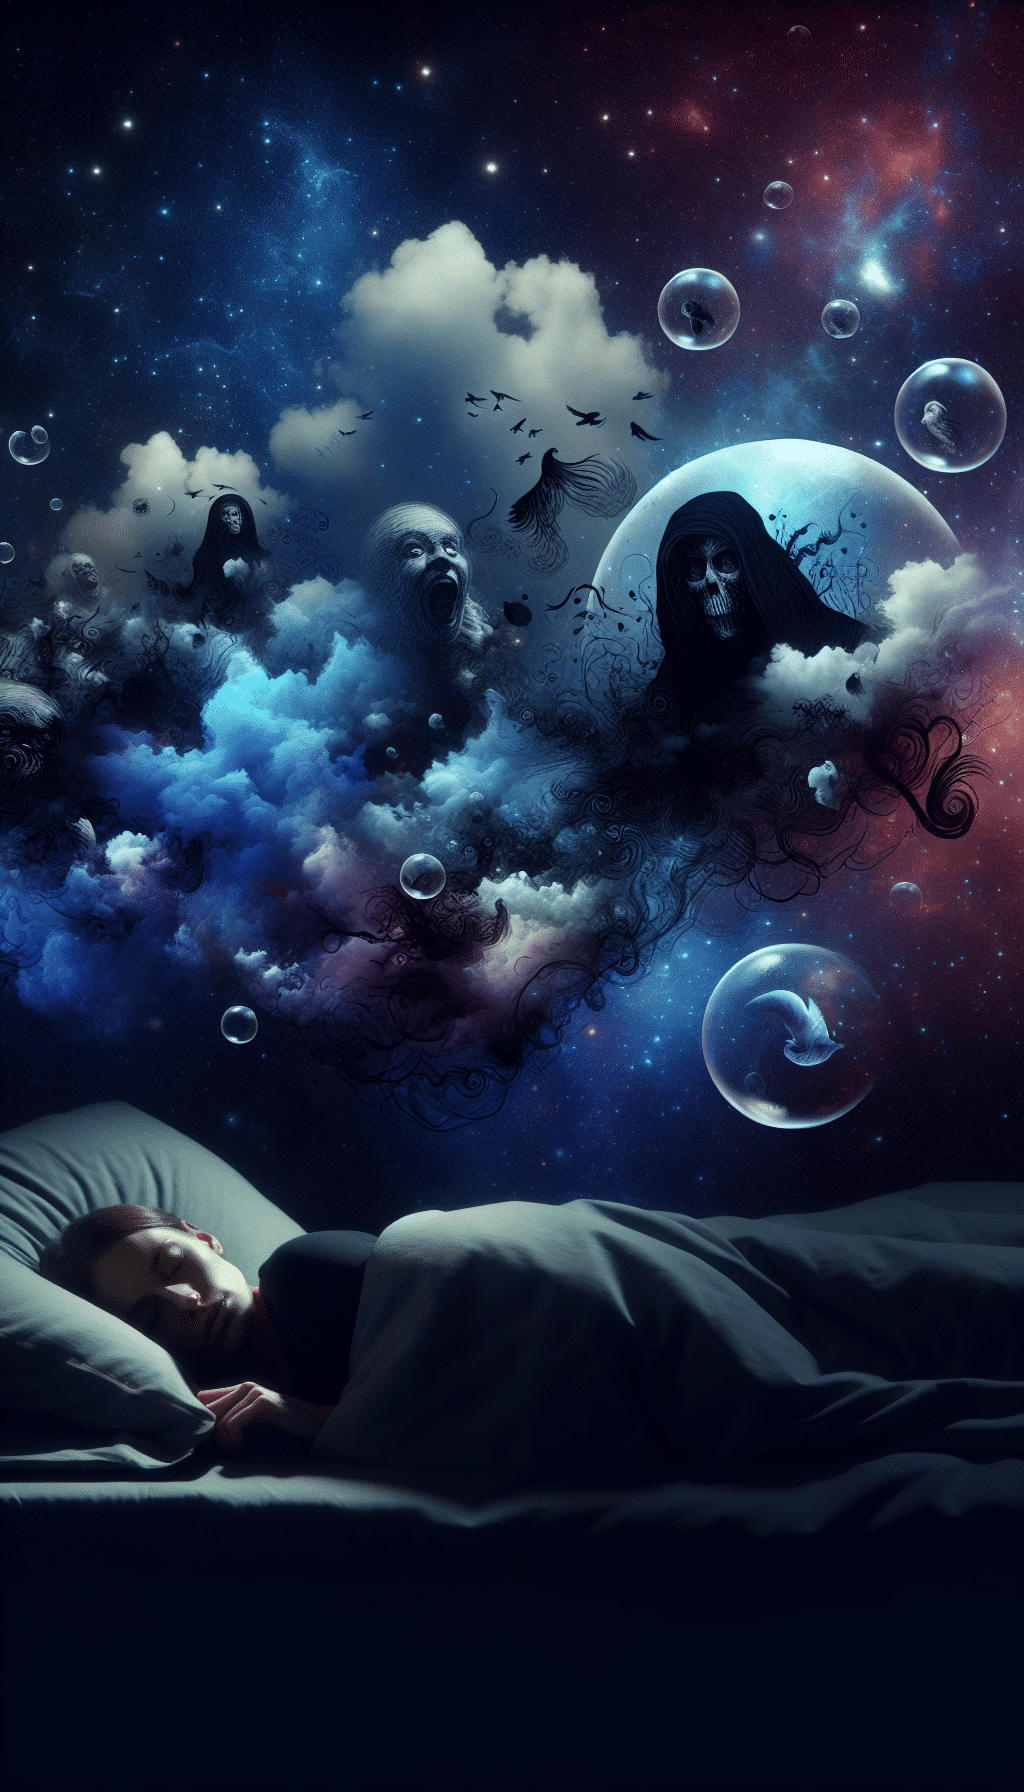 Understanding Dark Dreams: What Do They Mean?